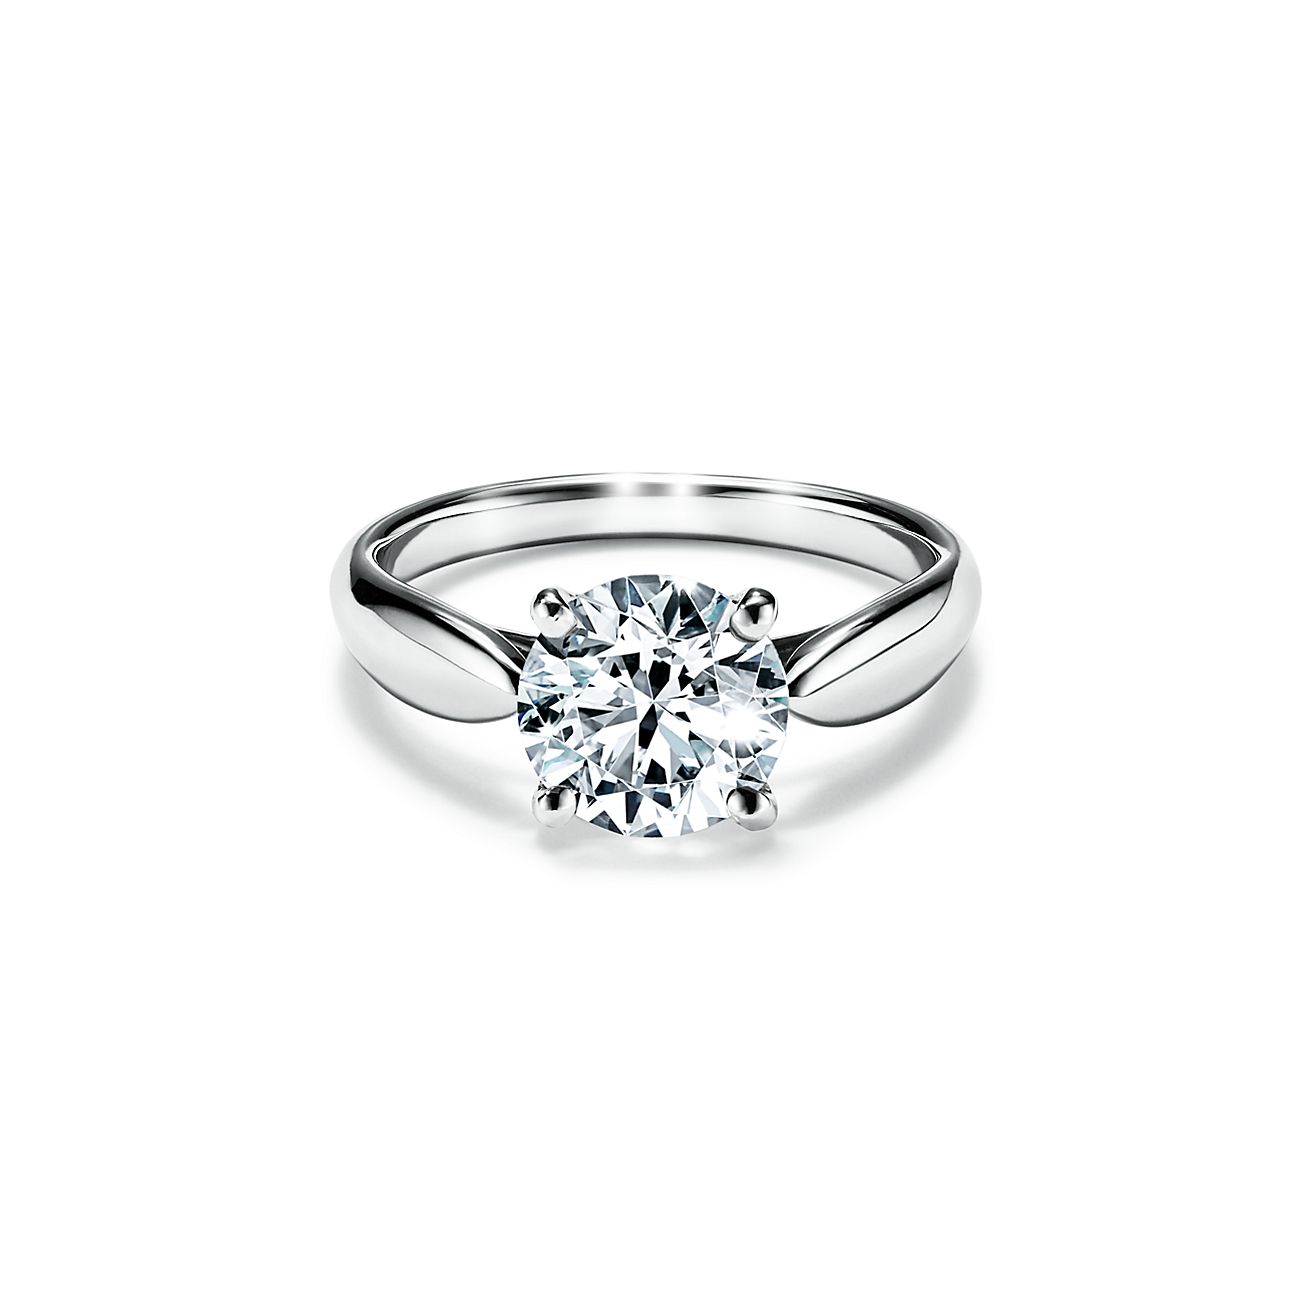 Tiffany Harmony™ engagement ring in 